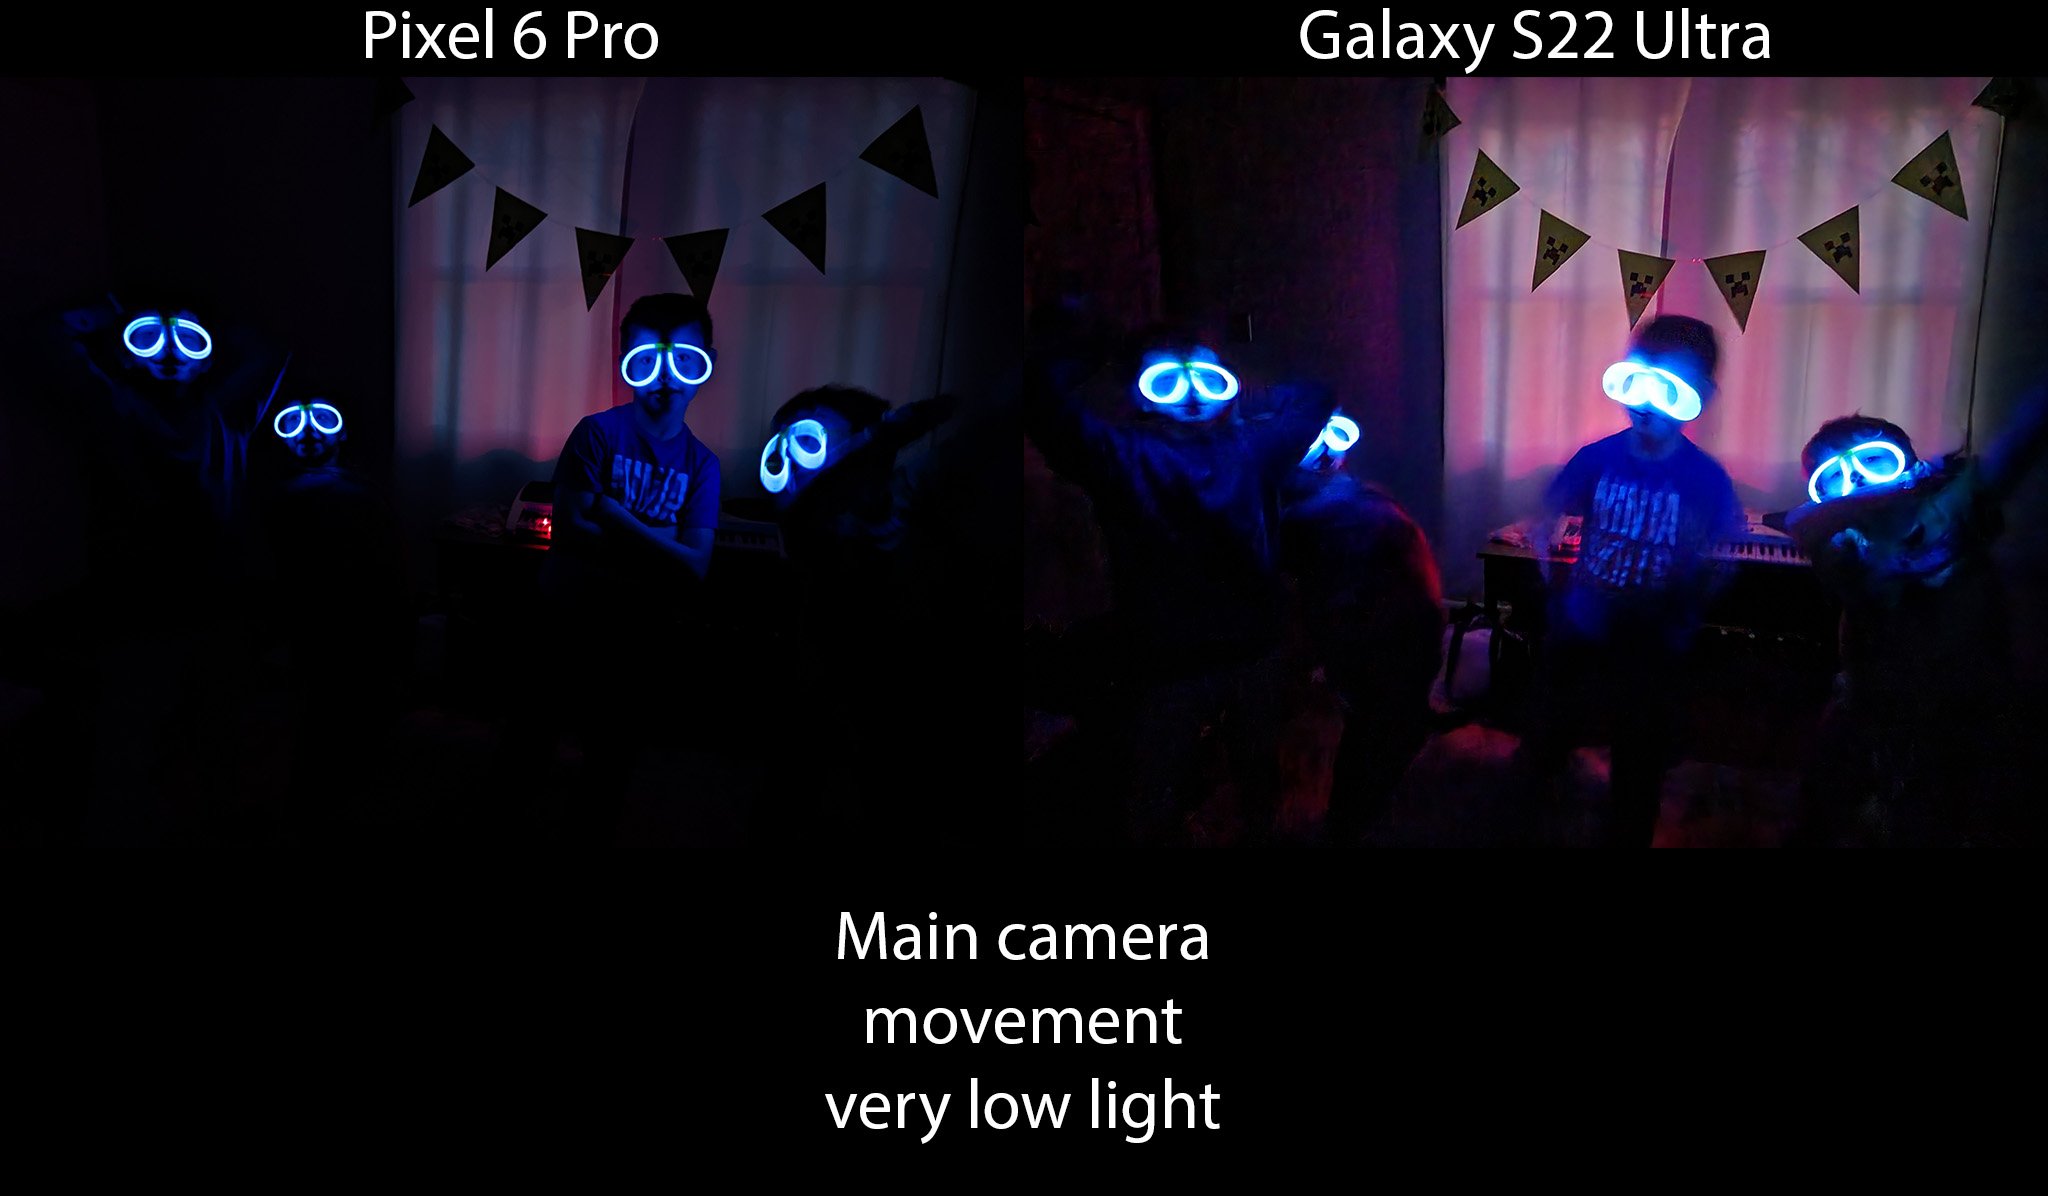 Galaxy S22 Ultra Vs Pixel 6 Pro Main Camera Movement